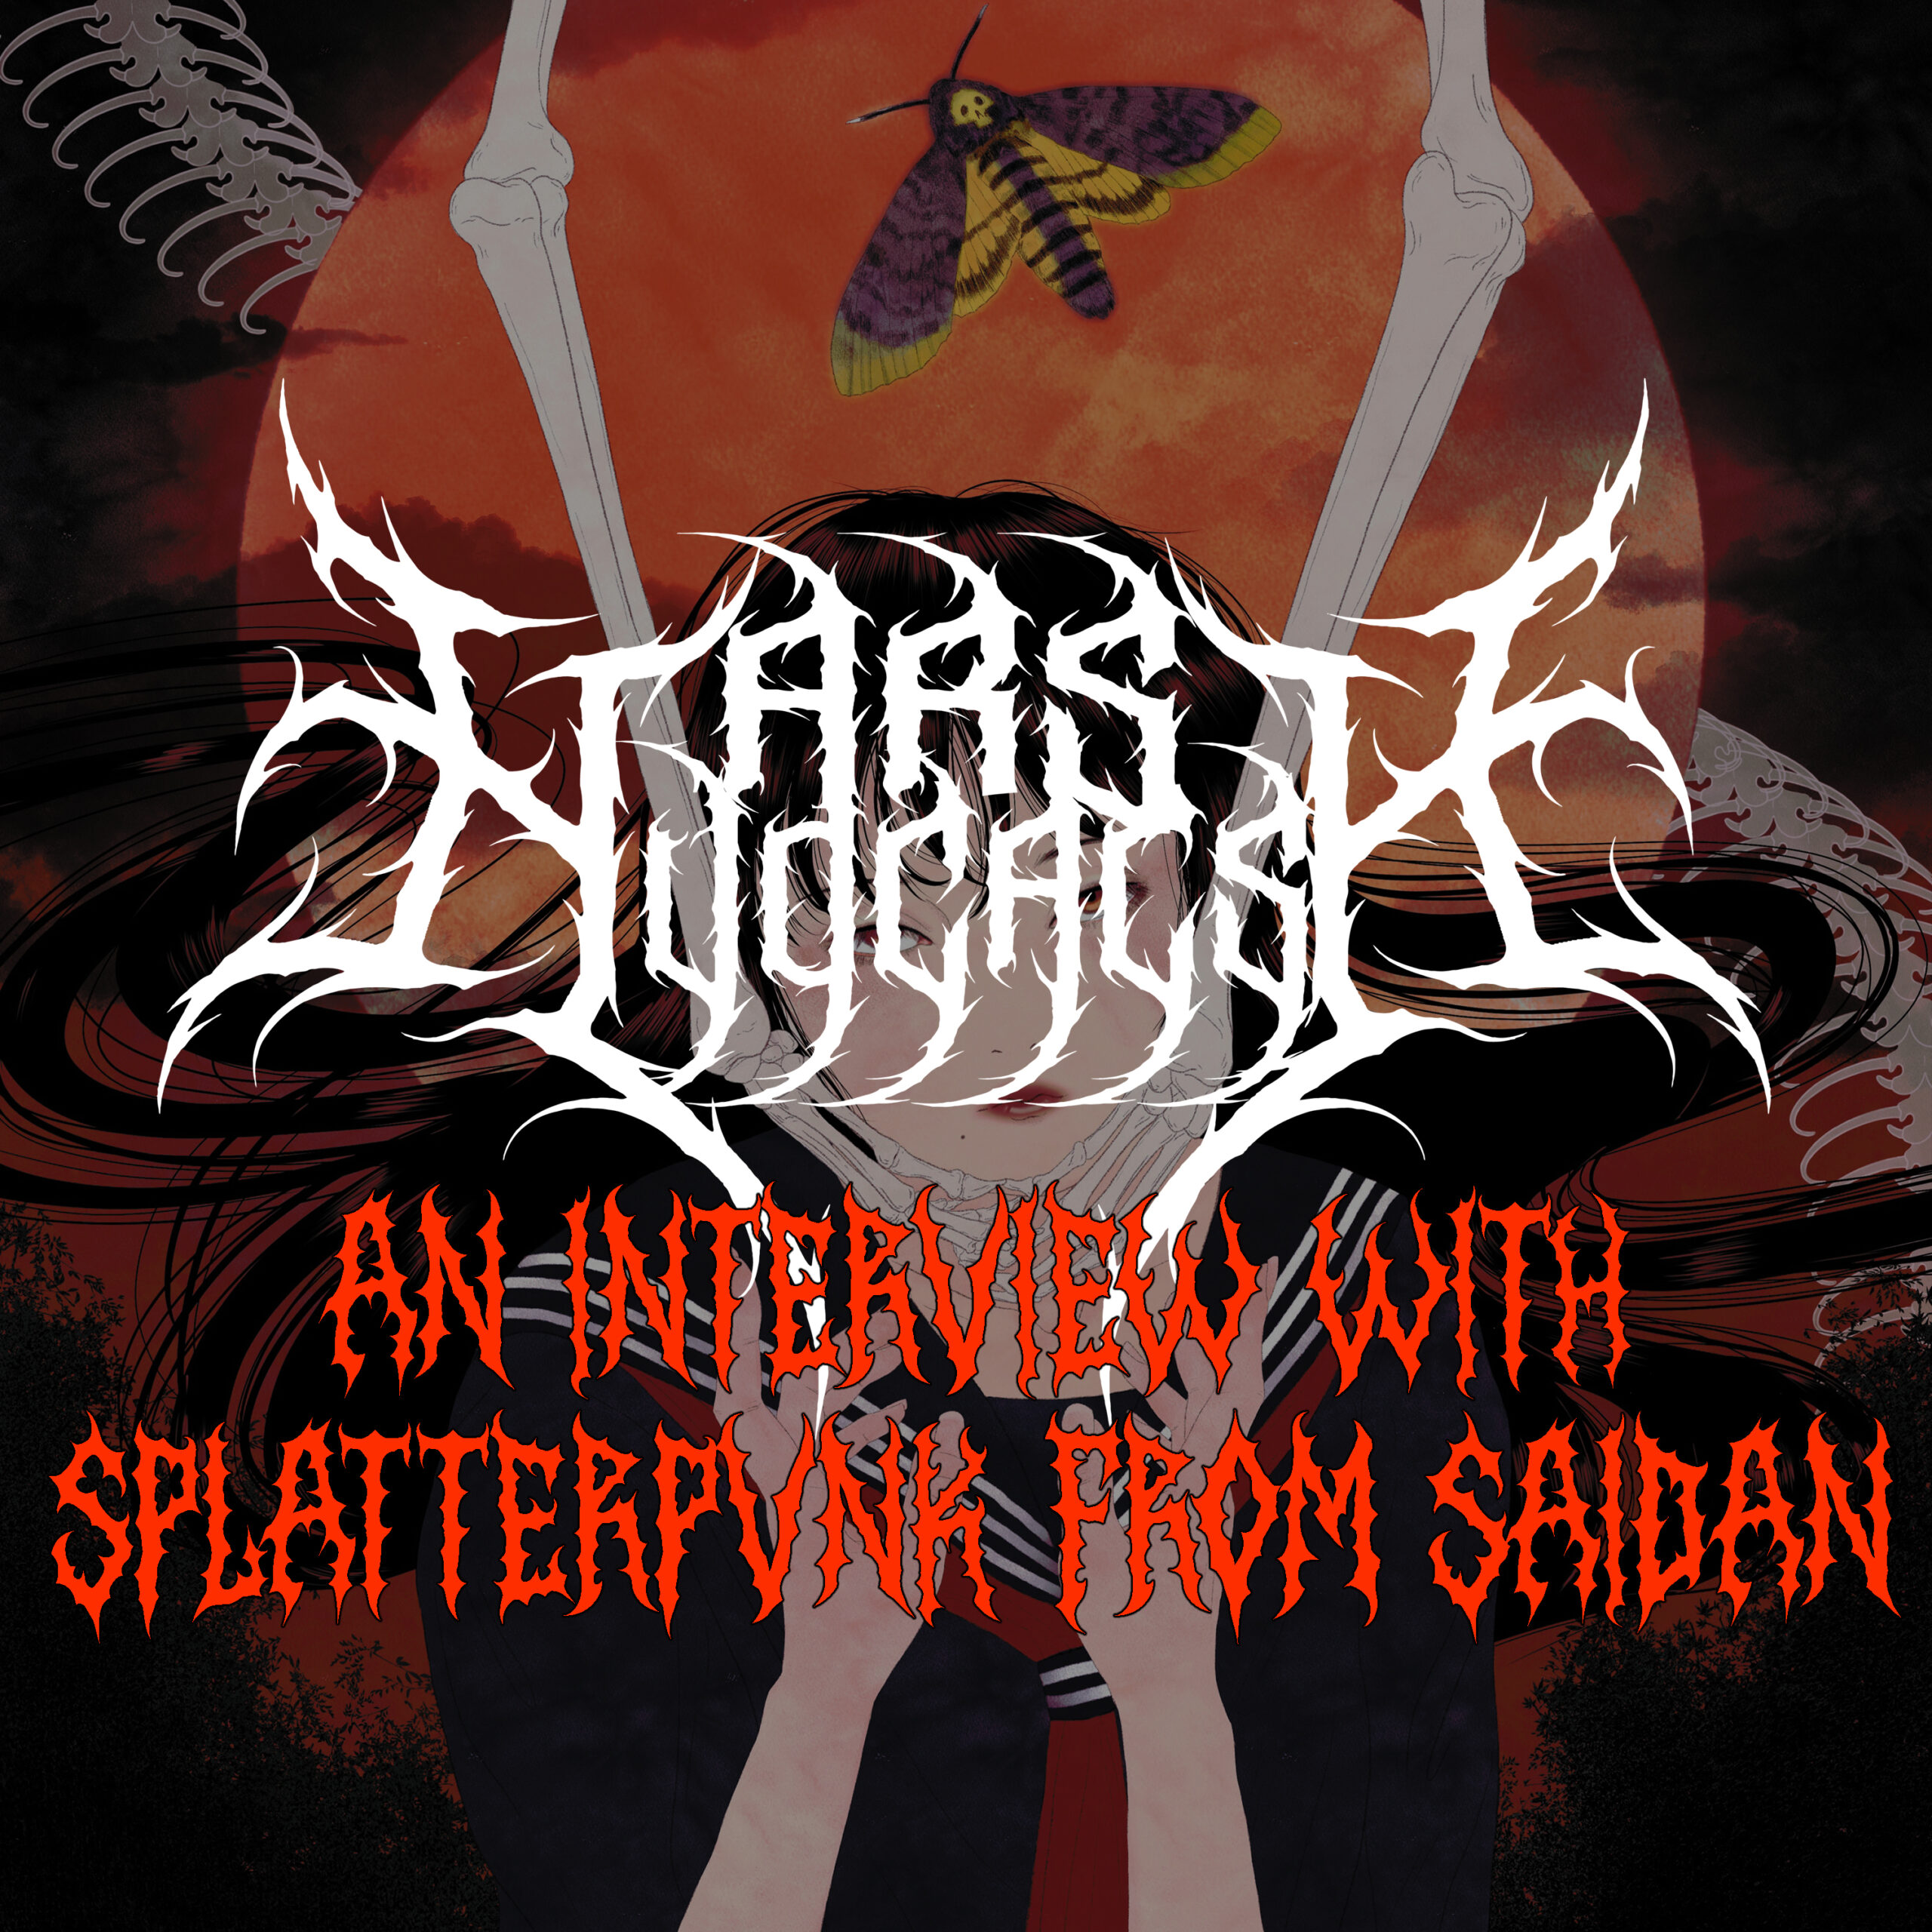 Harsh Vocals – An Interview with Splatterpvnk of Saidan